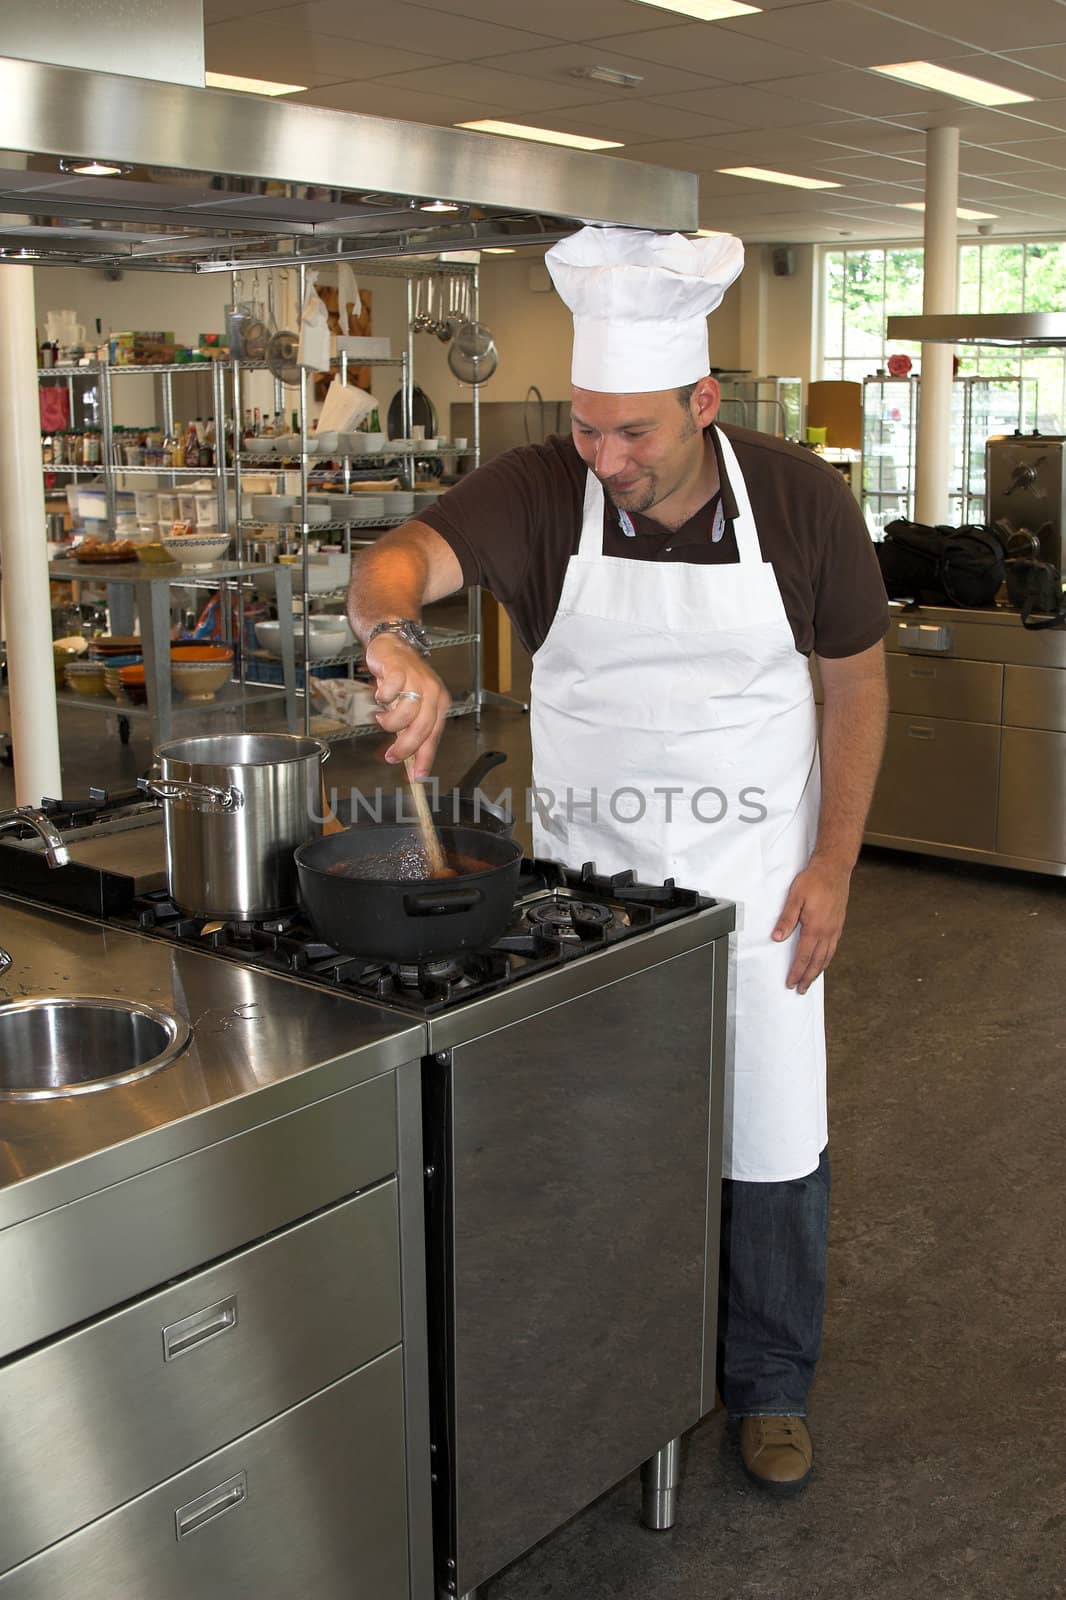 Italian chef working in the kitchen, stirring the tomatoe sauce